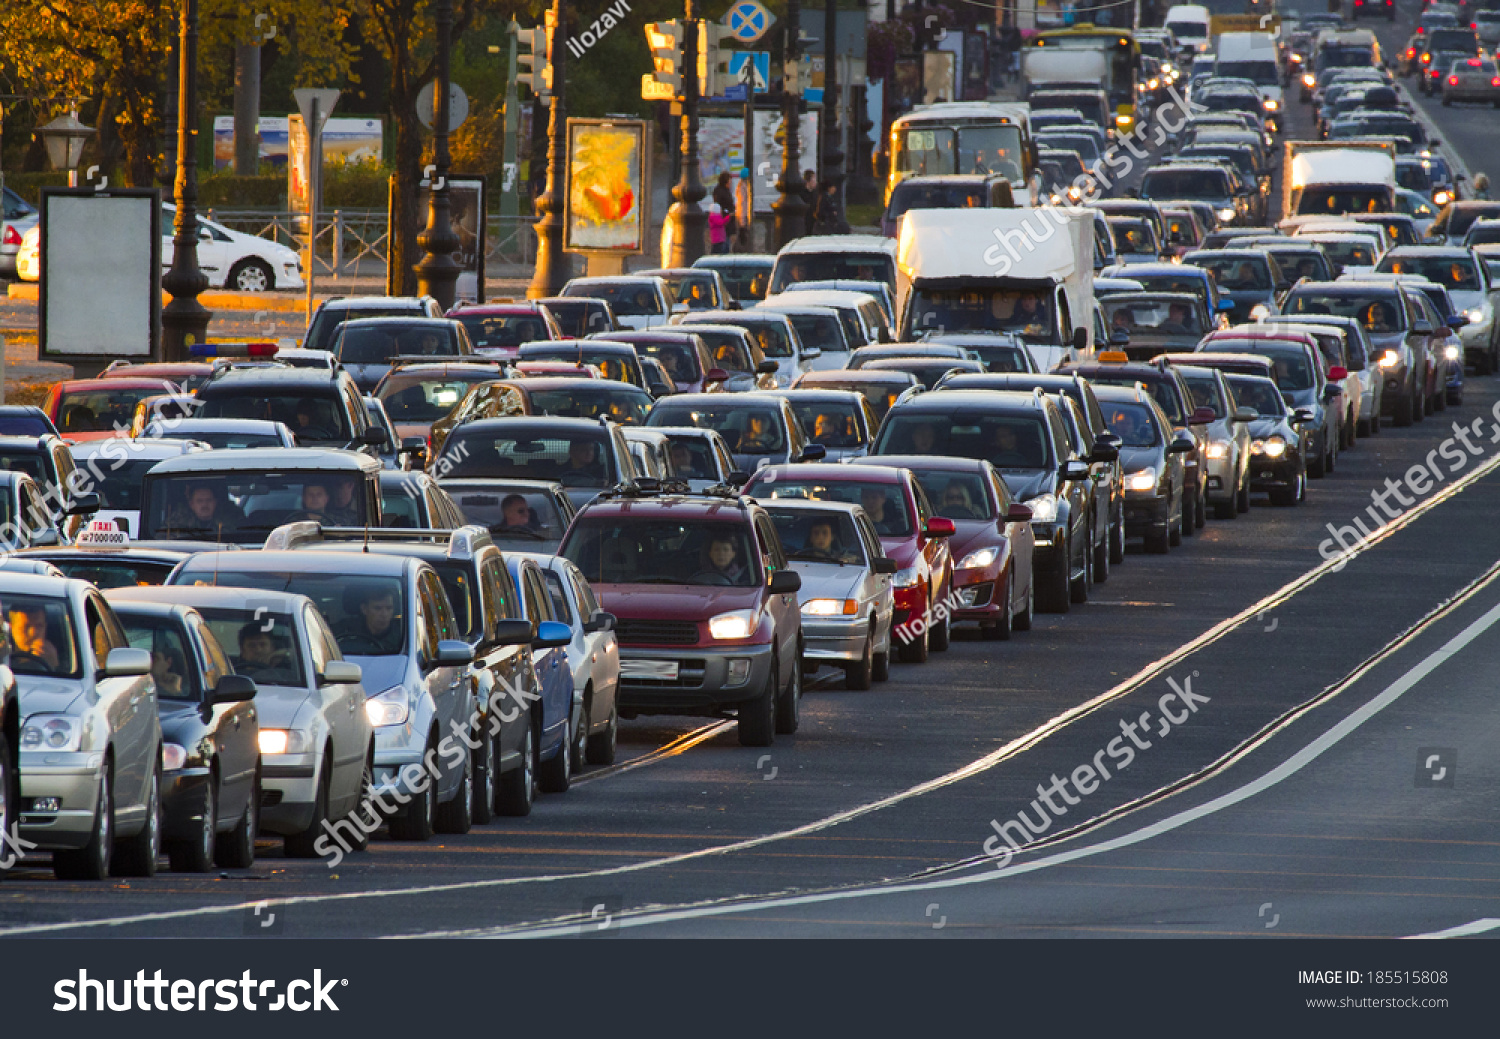 cars, city traffic, traffic jams, a stream of cars #185515808